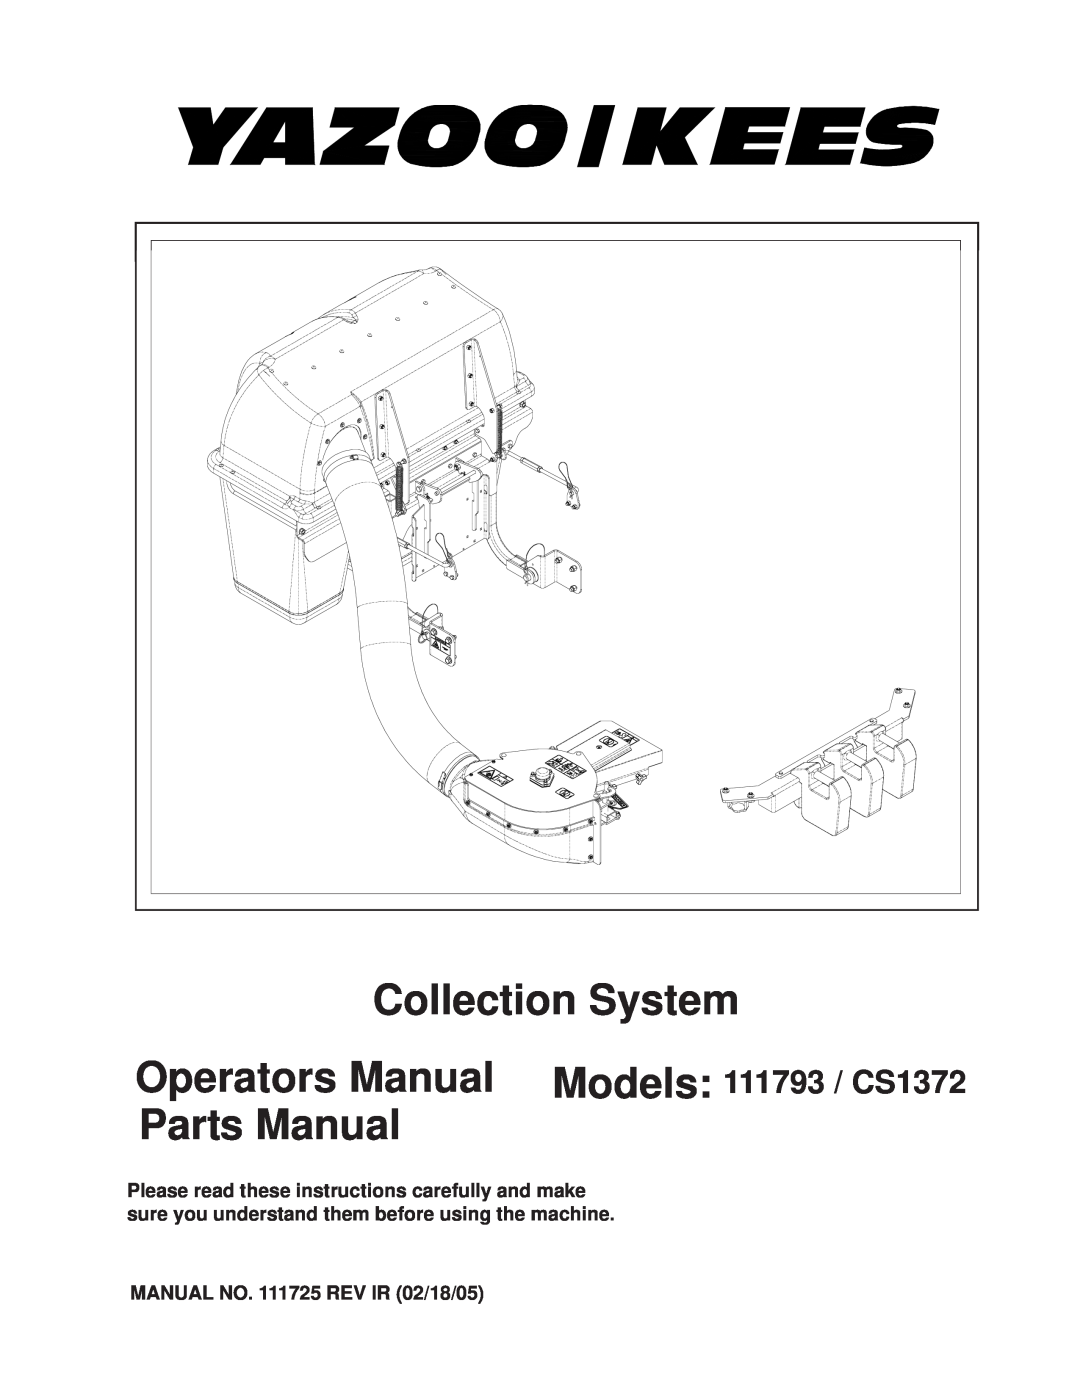 Yazoo/Kees 111793 / CS1372 manual Collection System, MANUAL NO. 111725 REV IR 02/18/05 